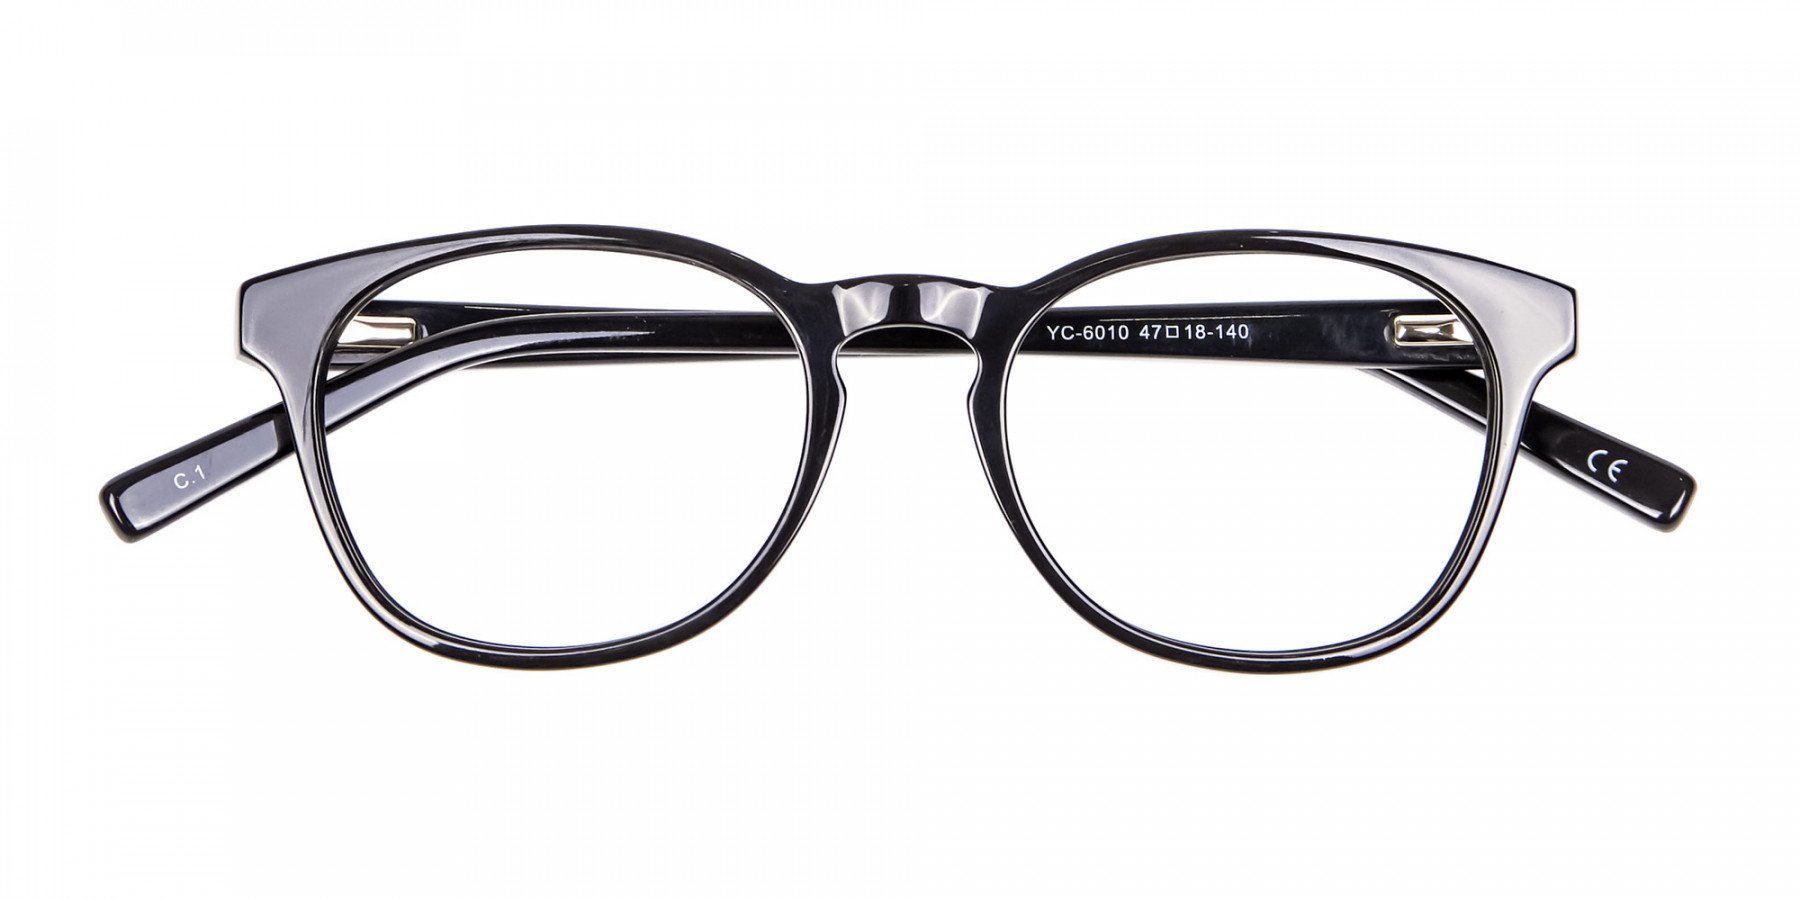 Round Shape Glasses in Black- 1